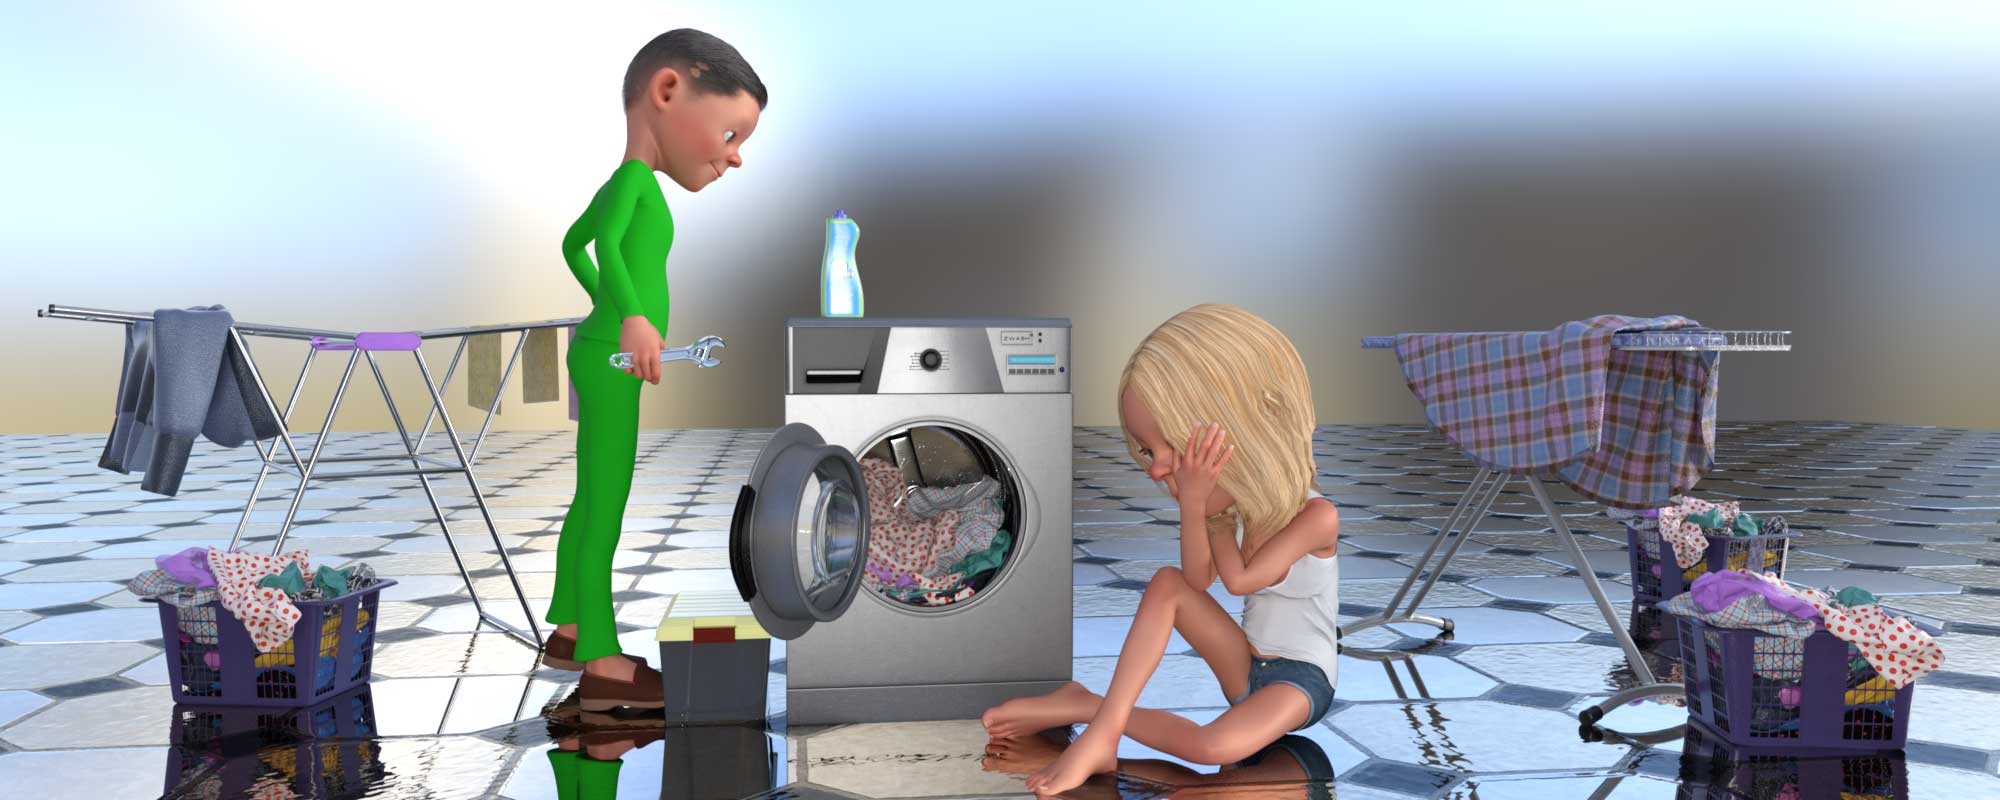 Repair man fixing washing machine